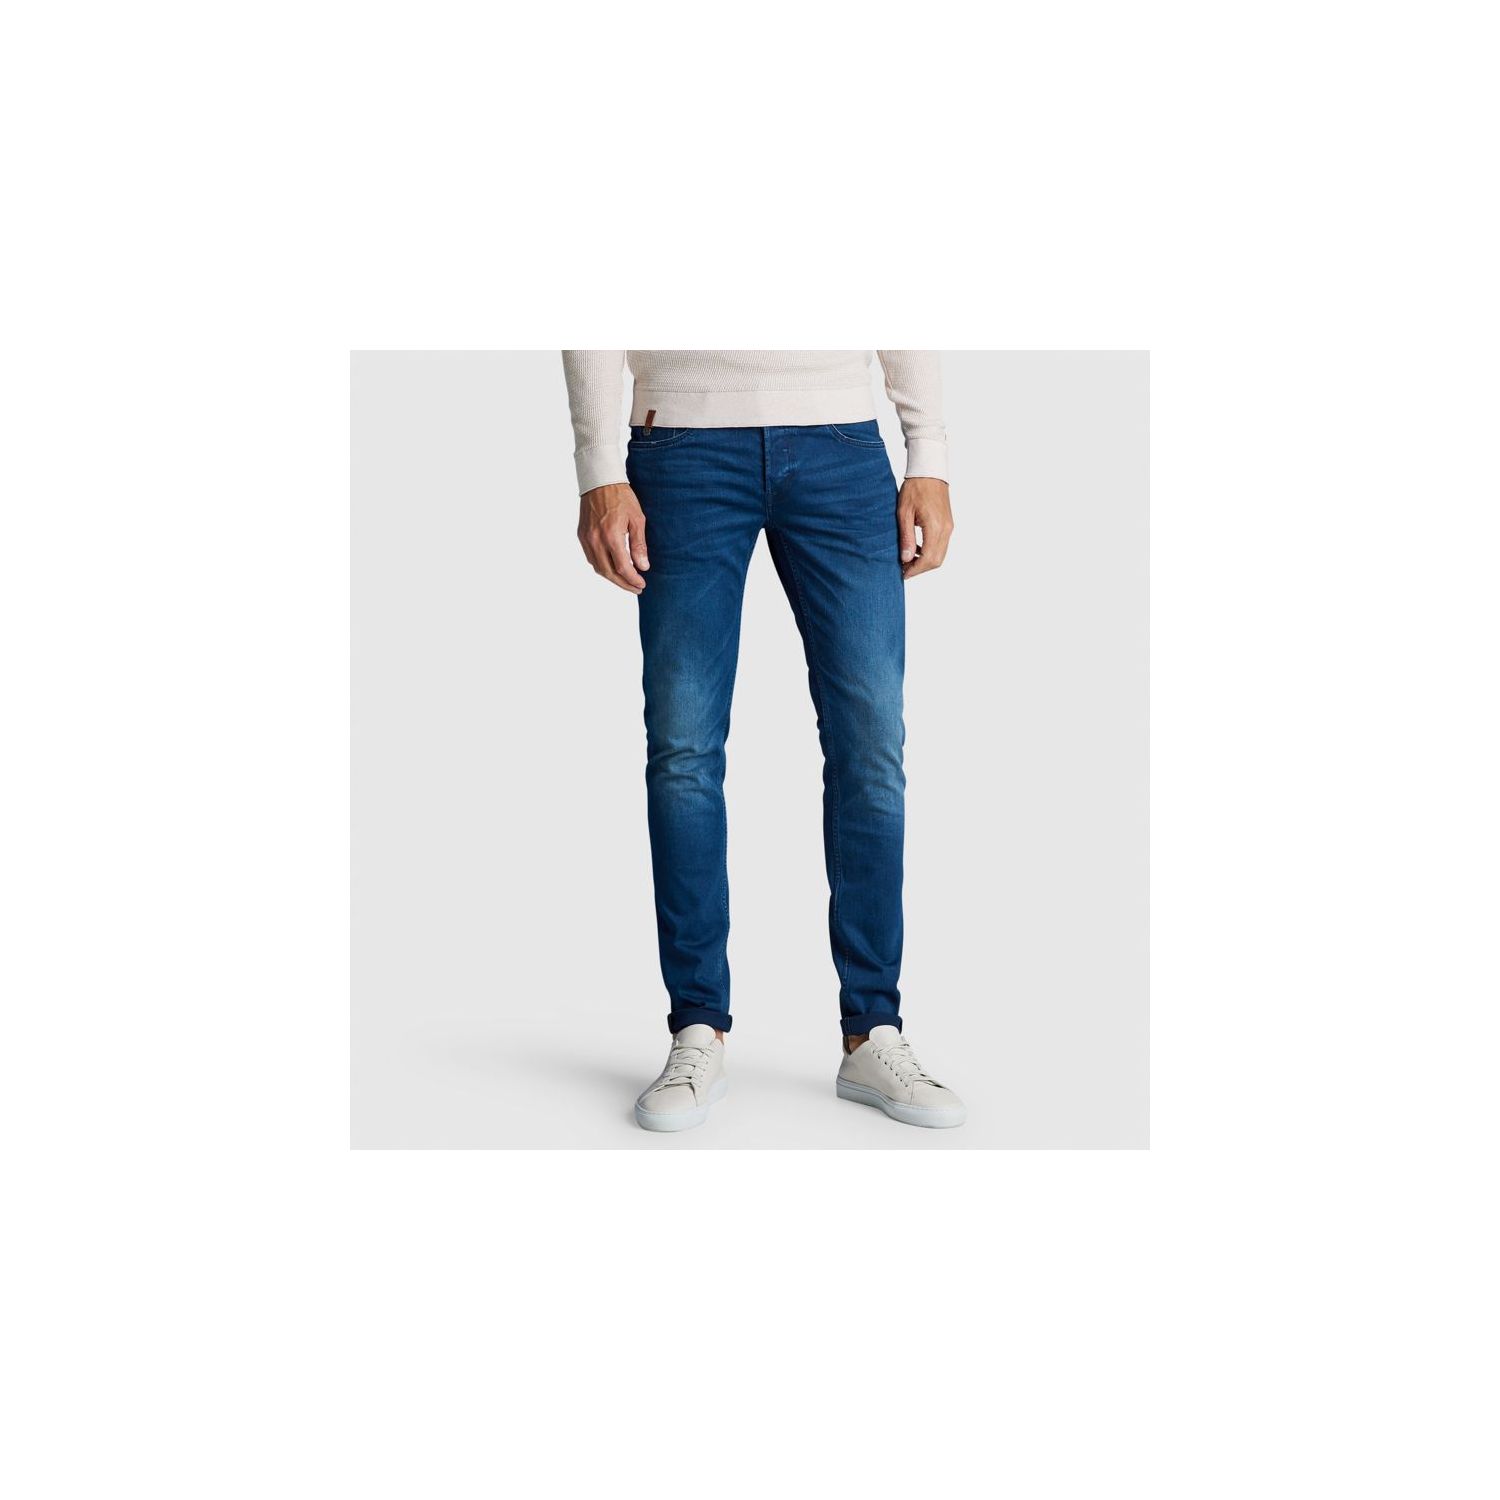 Cast Iron riser slim jeans blue blue finish